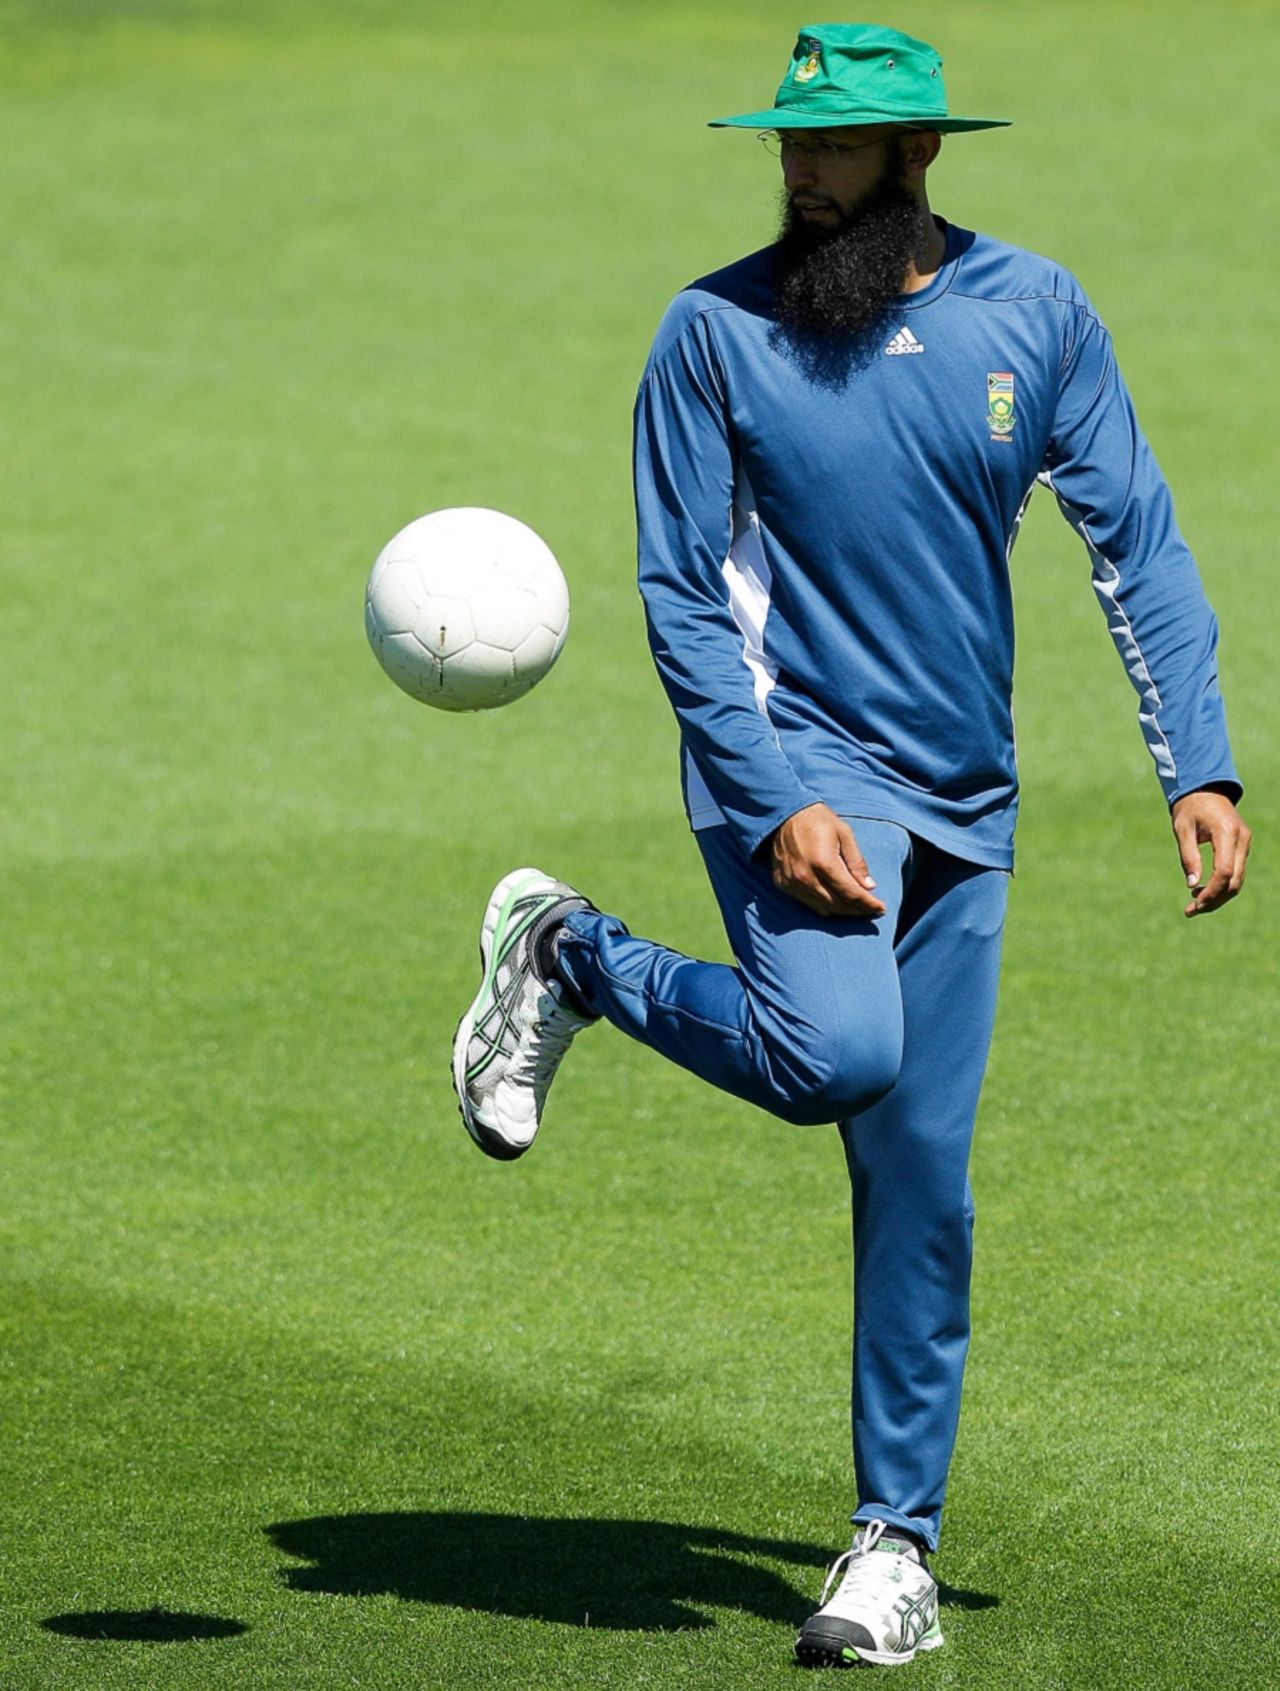 Hashim Amla hones his football-juggling skills during practice, World Cup 2015, Wellington, March 10, 2015